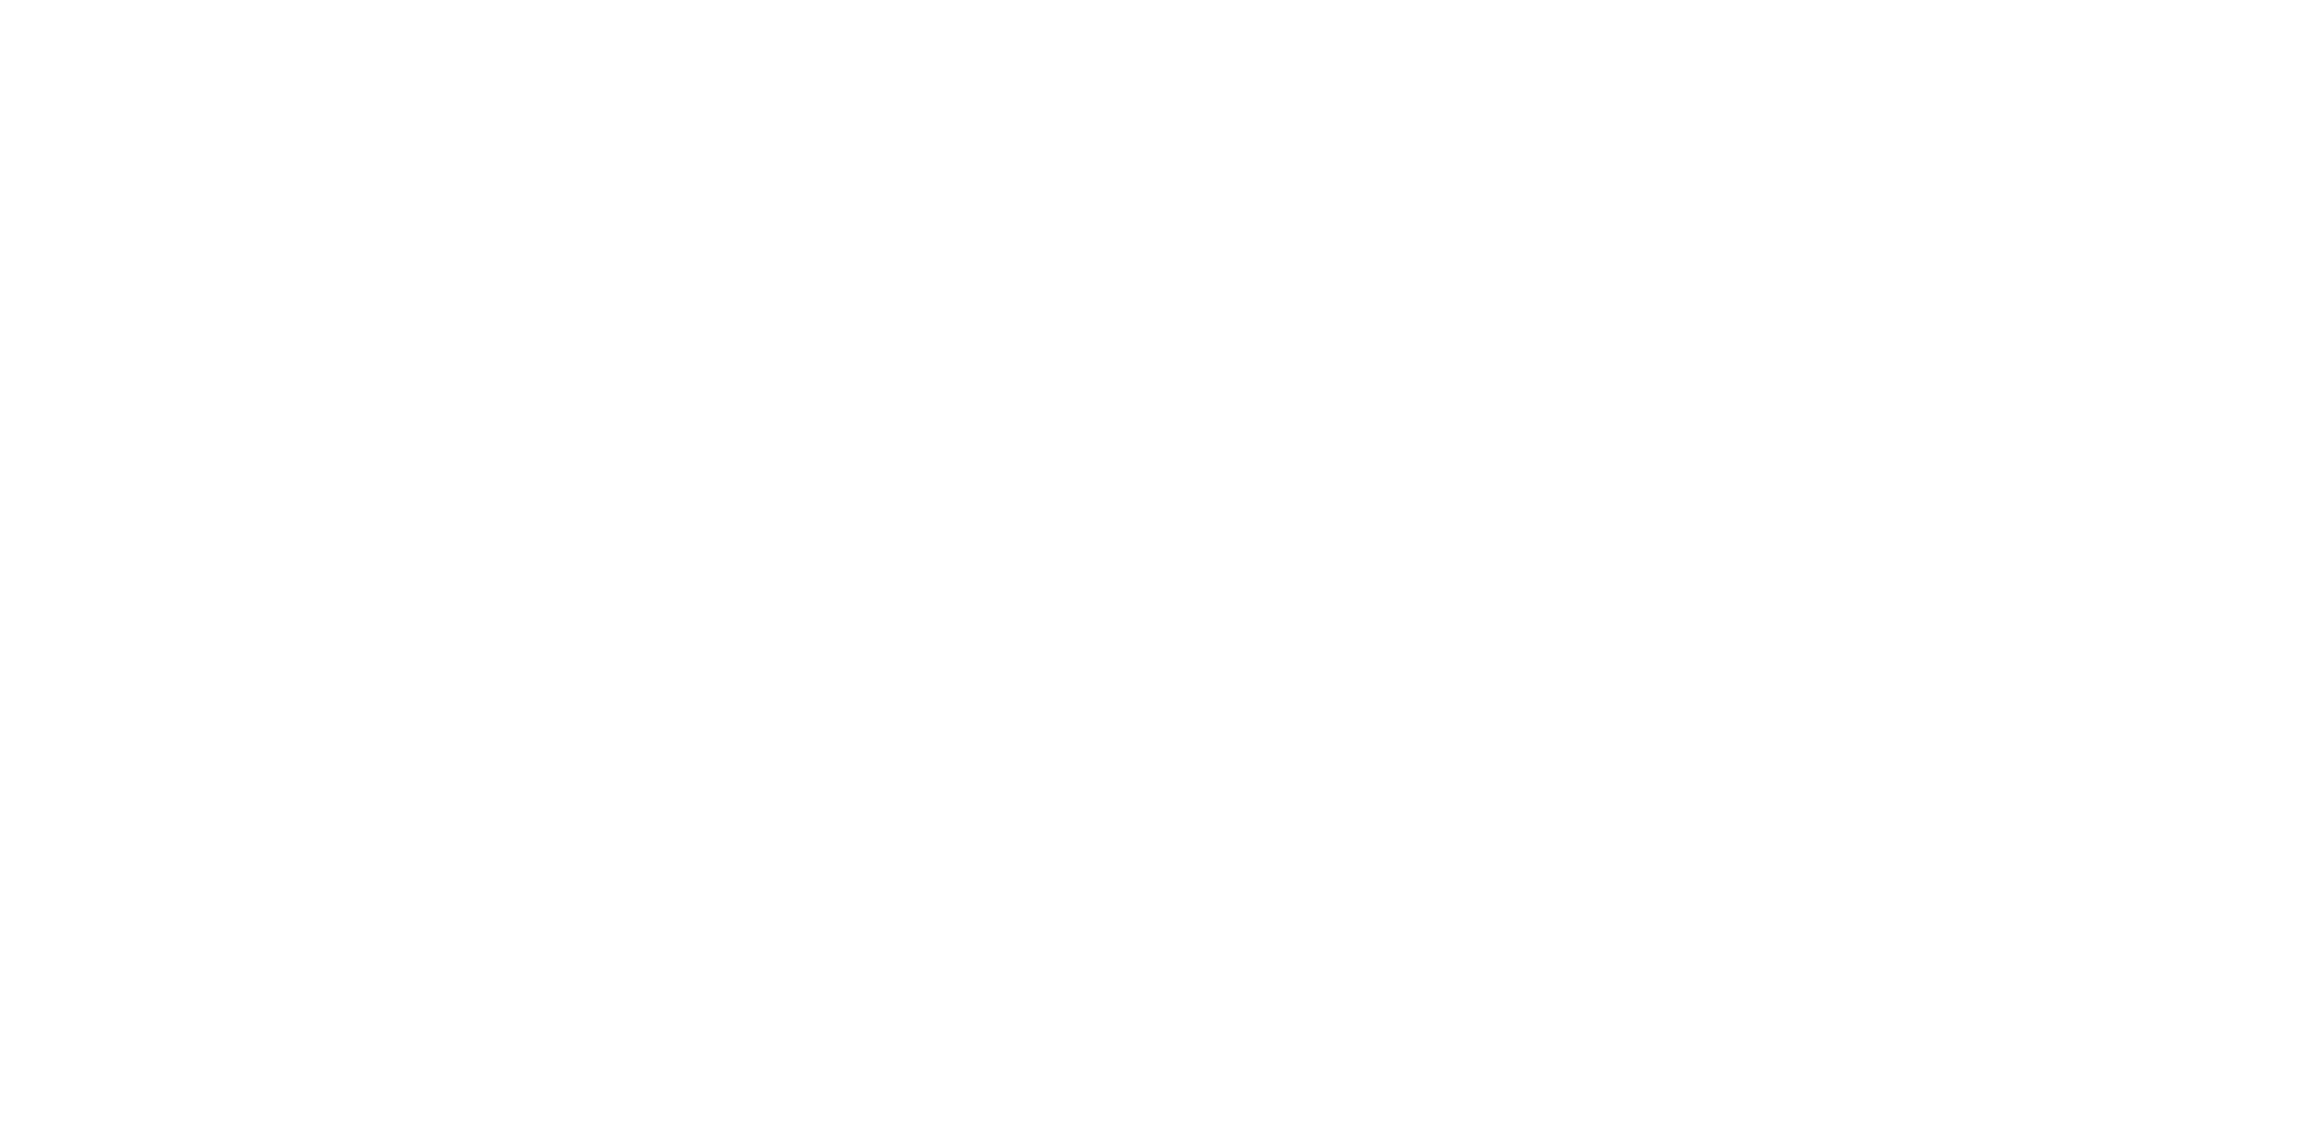 world heritage himeji castle marathon2025 感謝と感動をあなたに